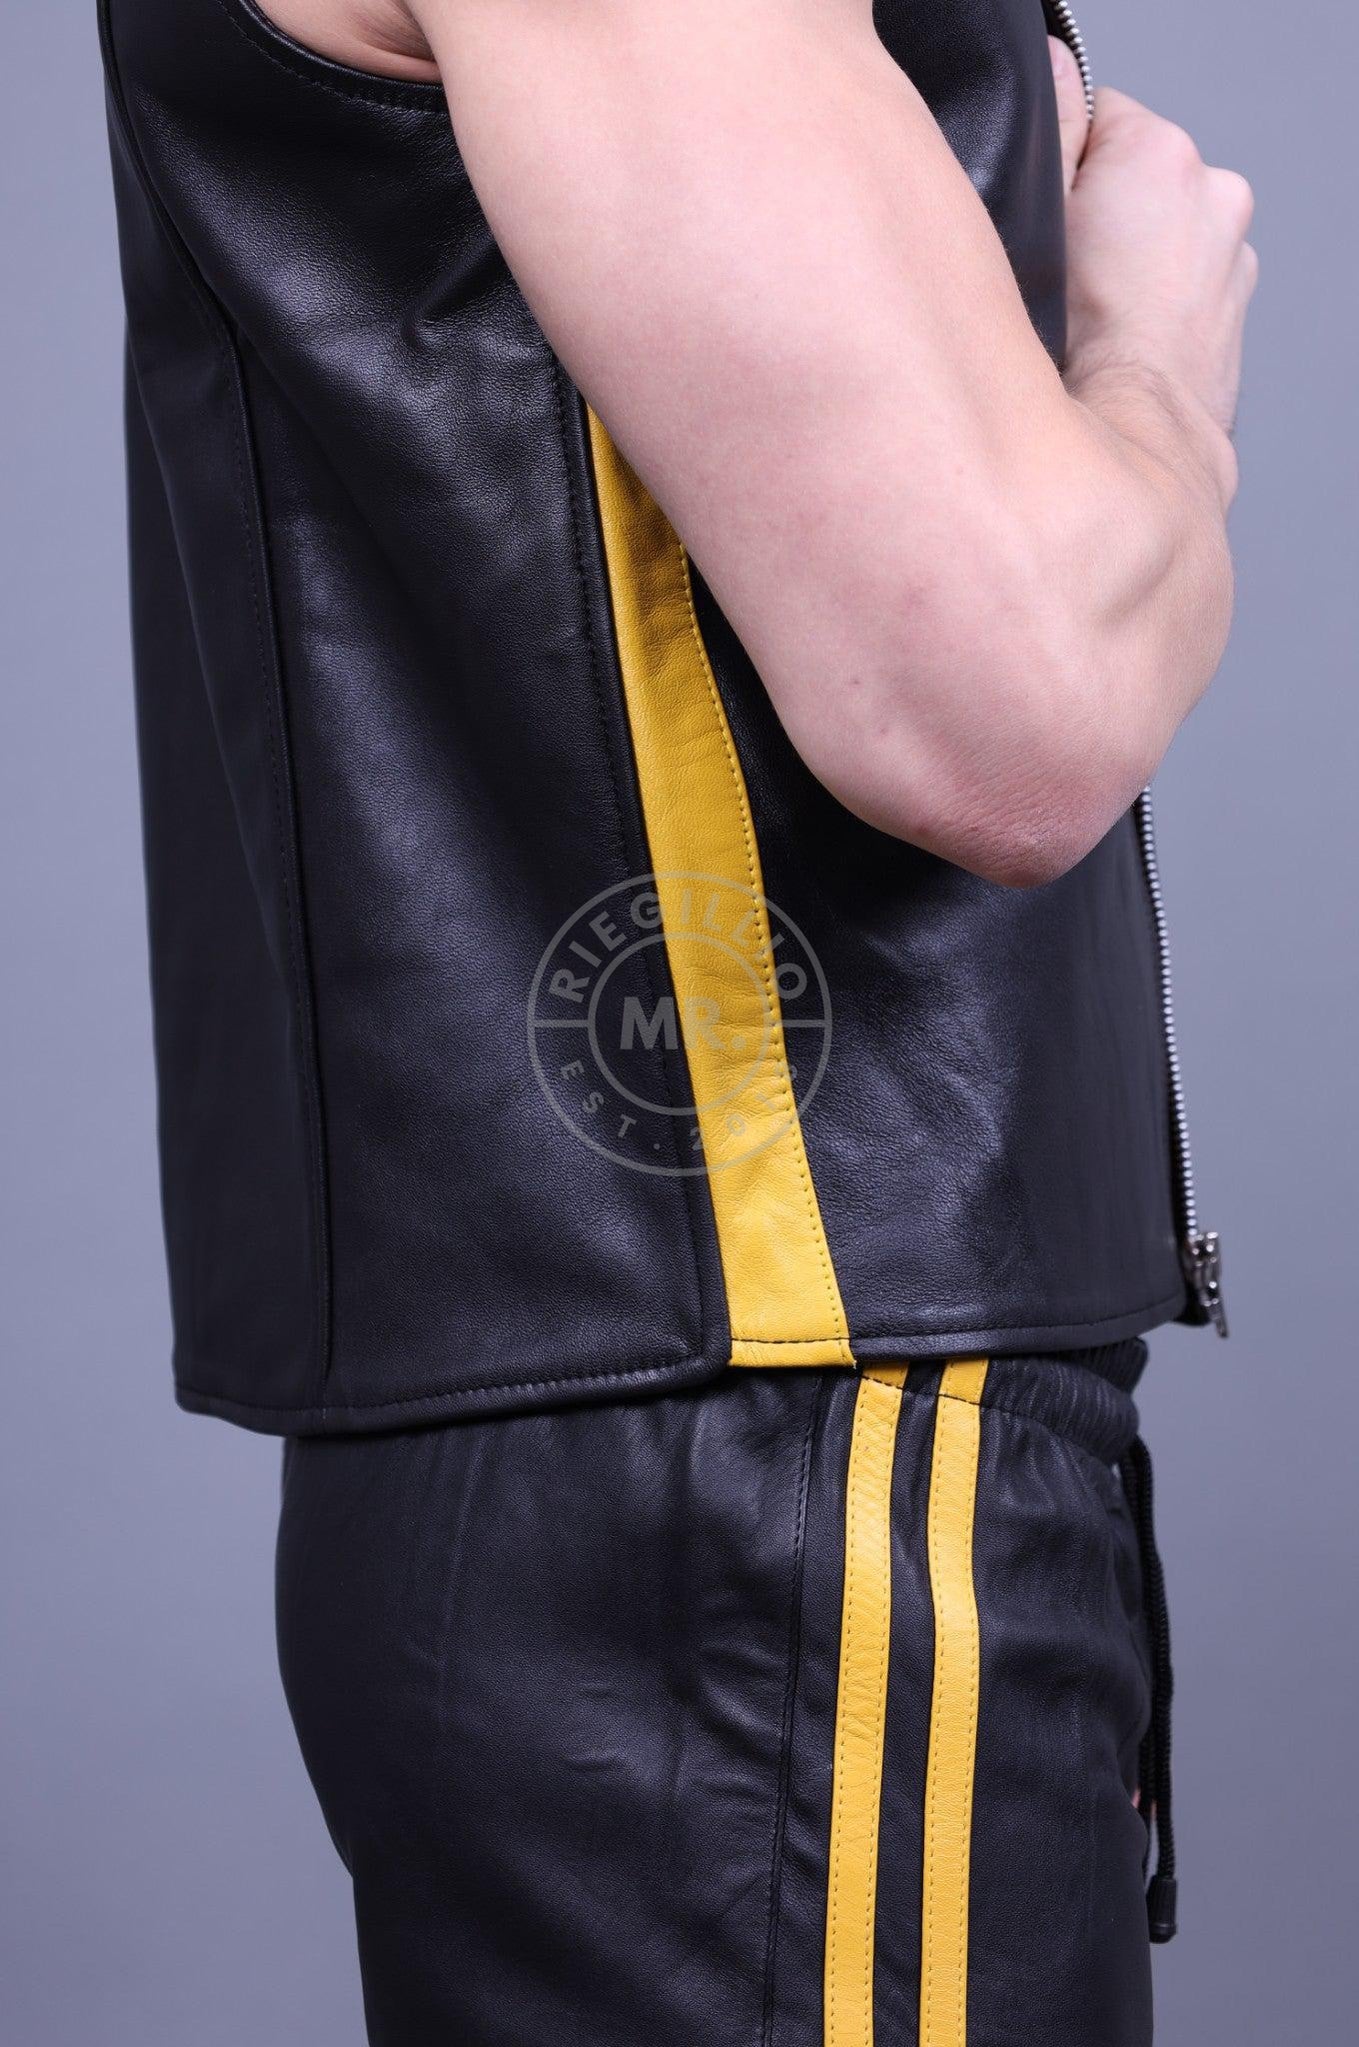 Leather Zipper Vest - Yellow Panels at MR. Riegillio